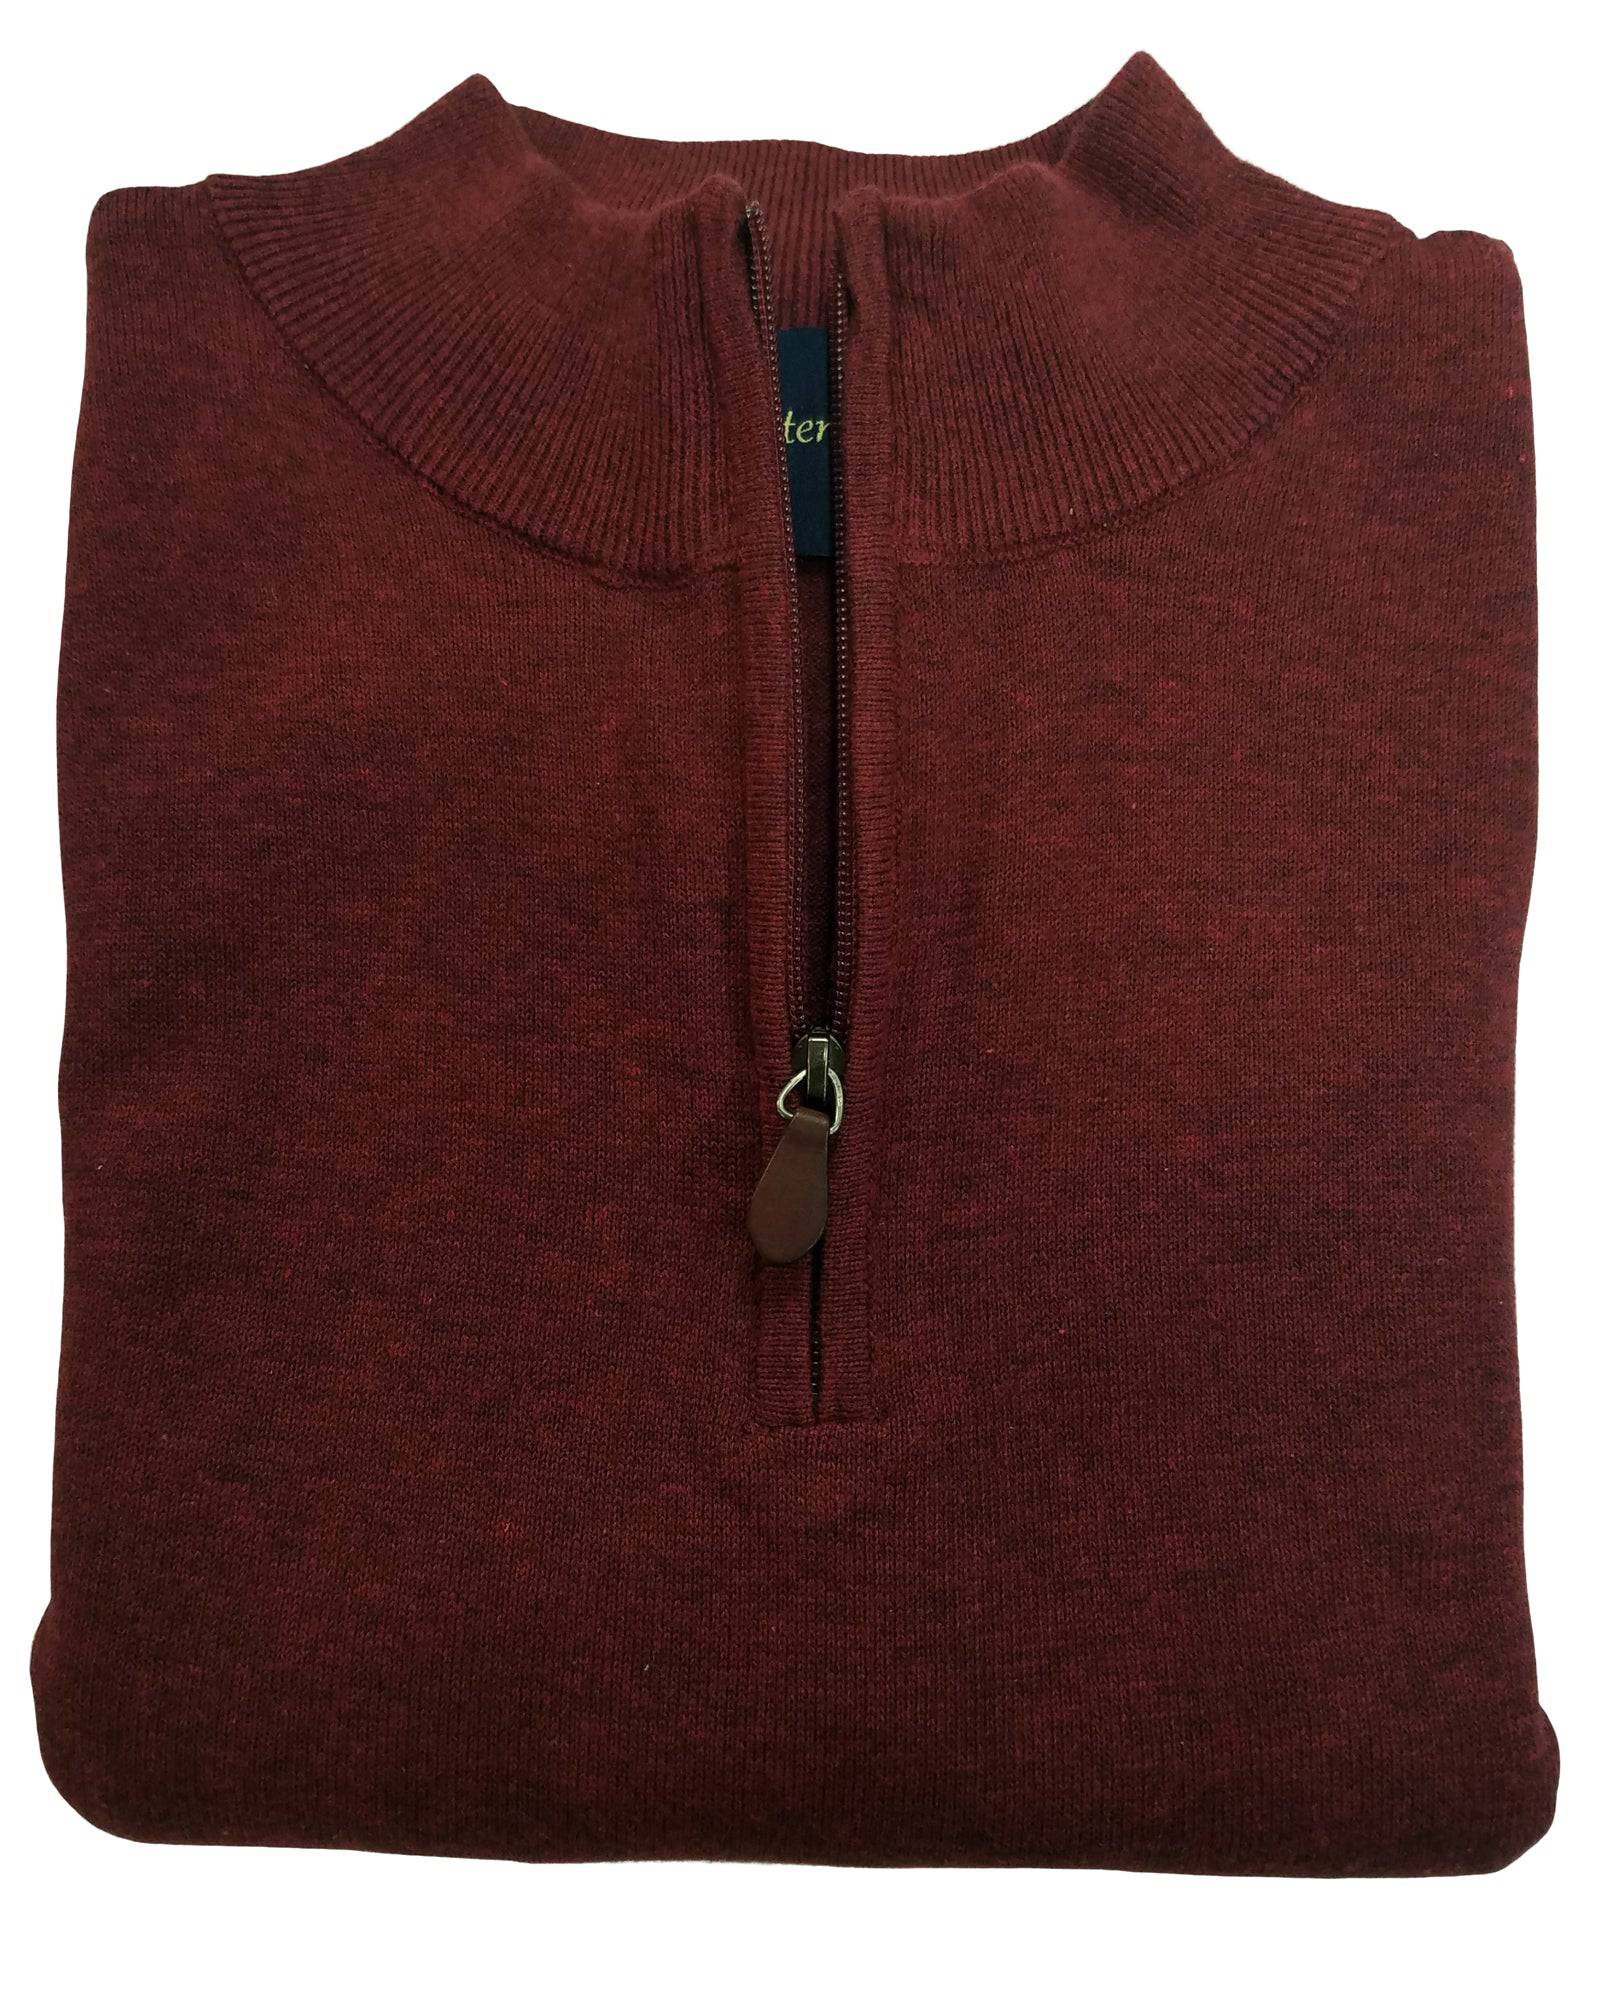 1/4 Zip Mock Sweater in Burgundy Heather Cotton Blend - Rainwater's Men's Clothing and Tuxedo Rental